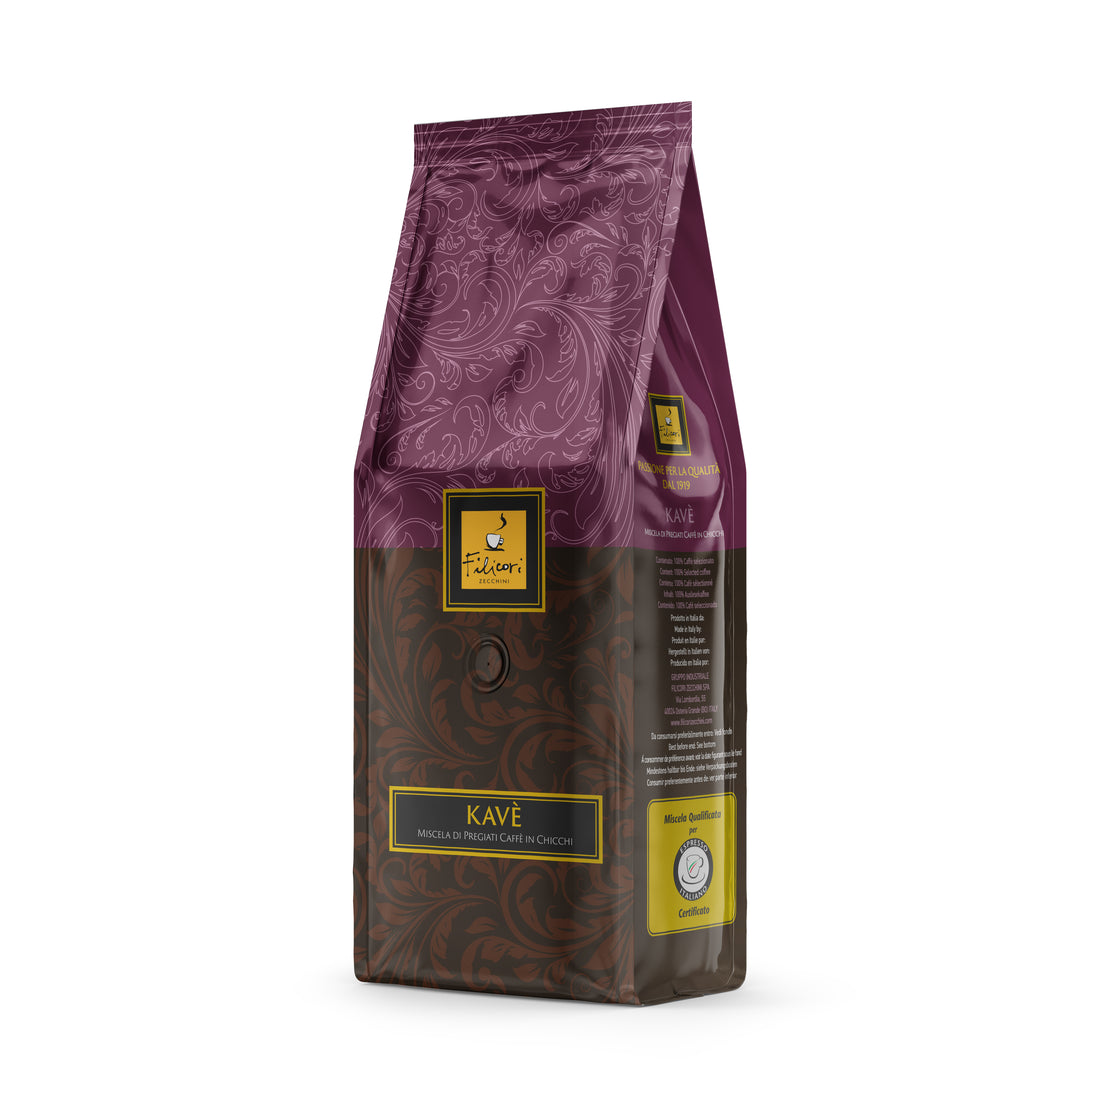 Filicori Zecchini Kave Whole Bean Coffee